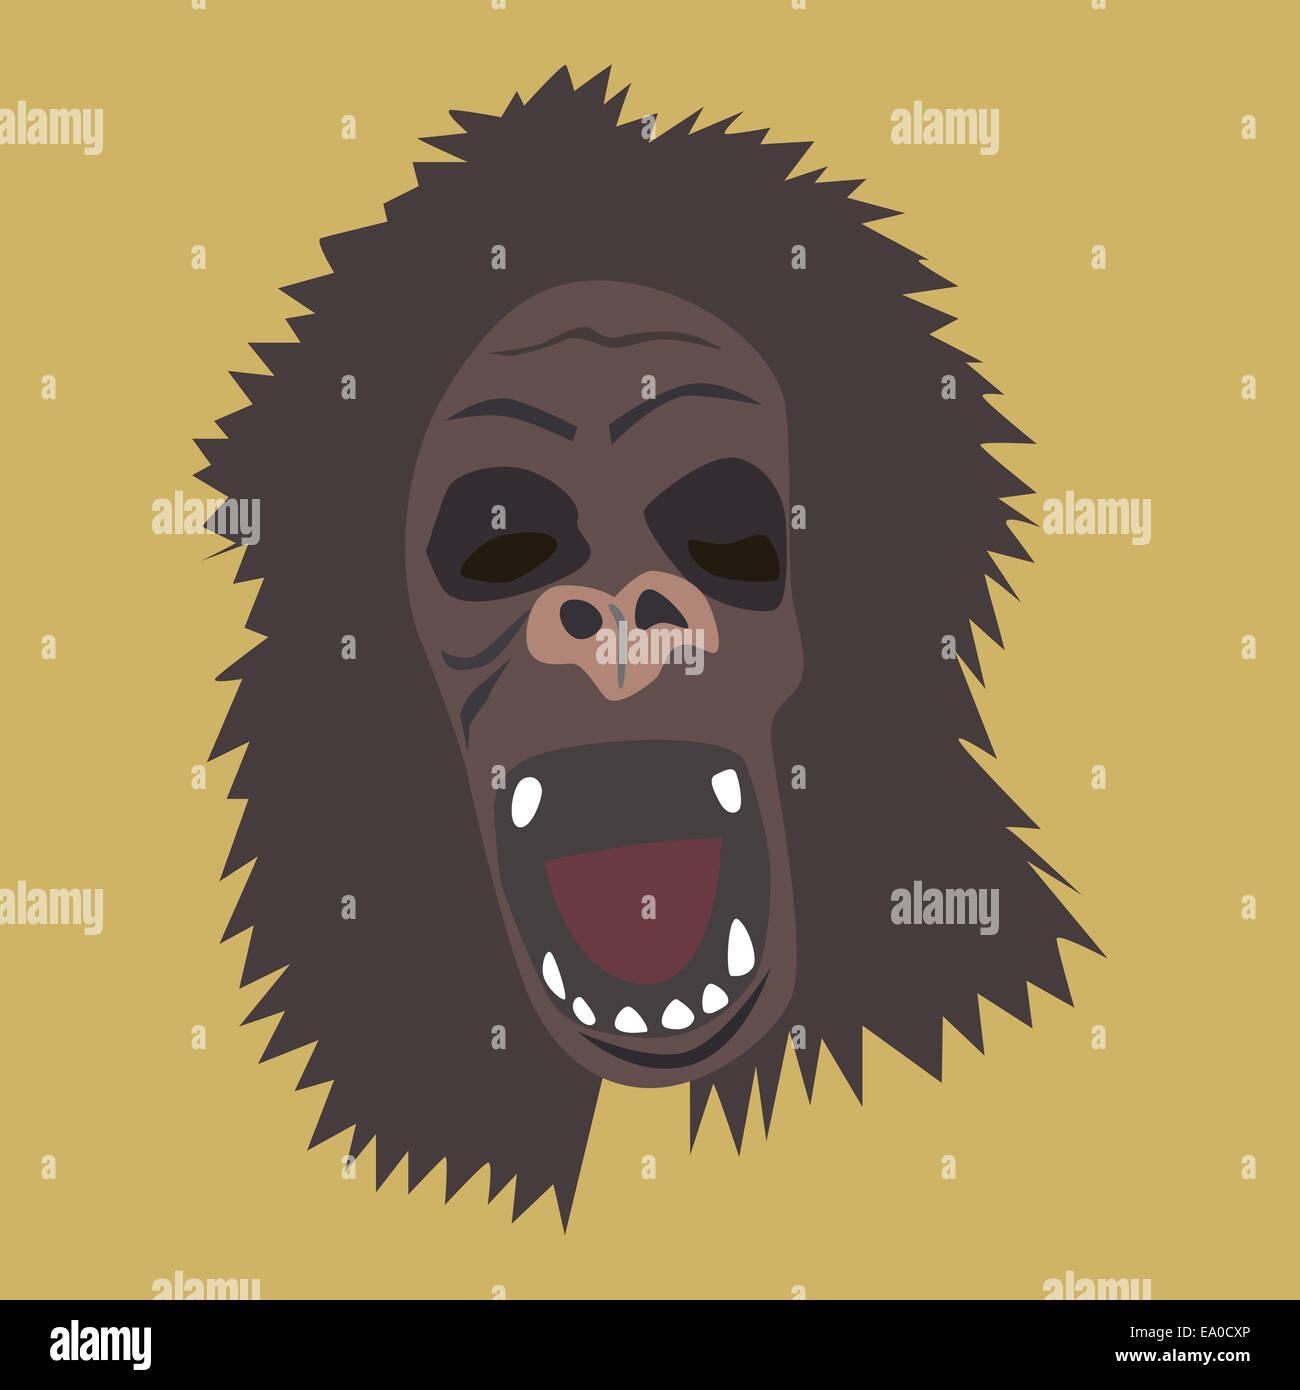 Illustration horrible gorilla head Stock Photo